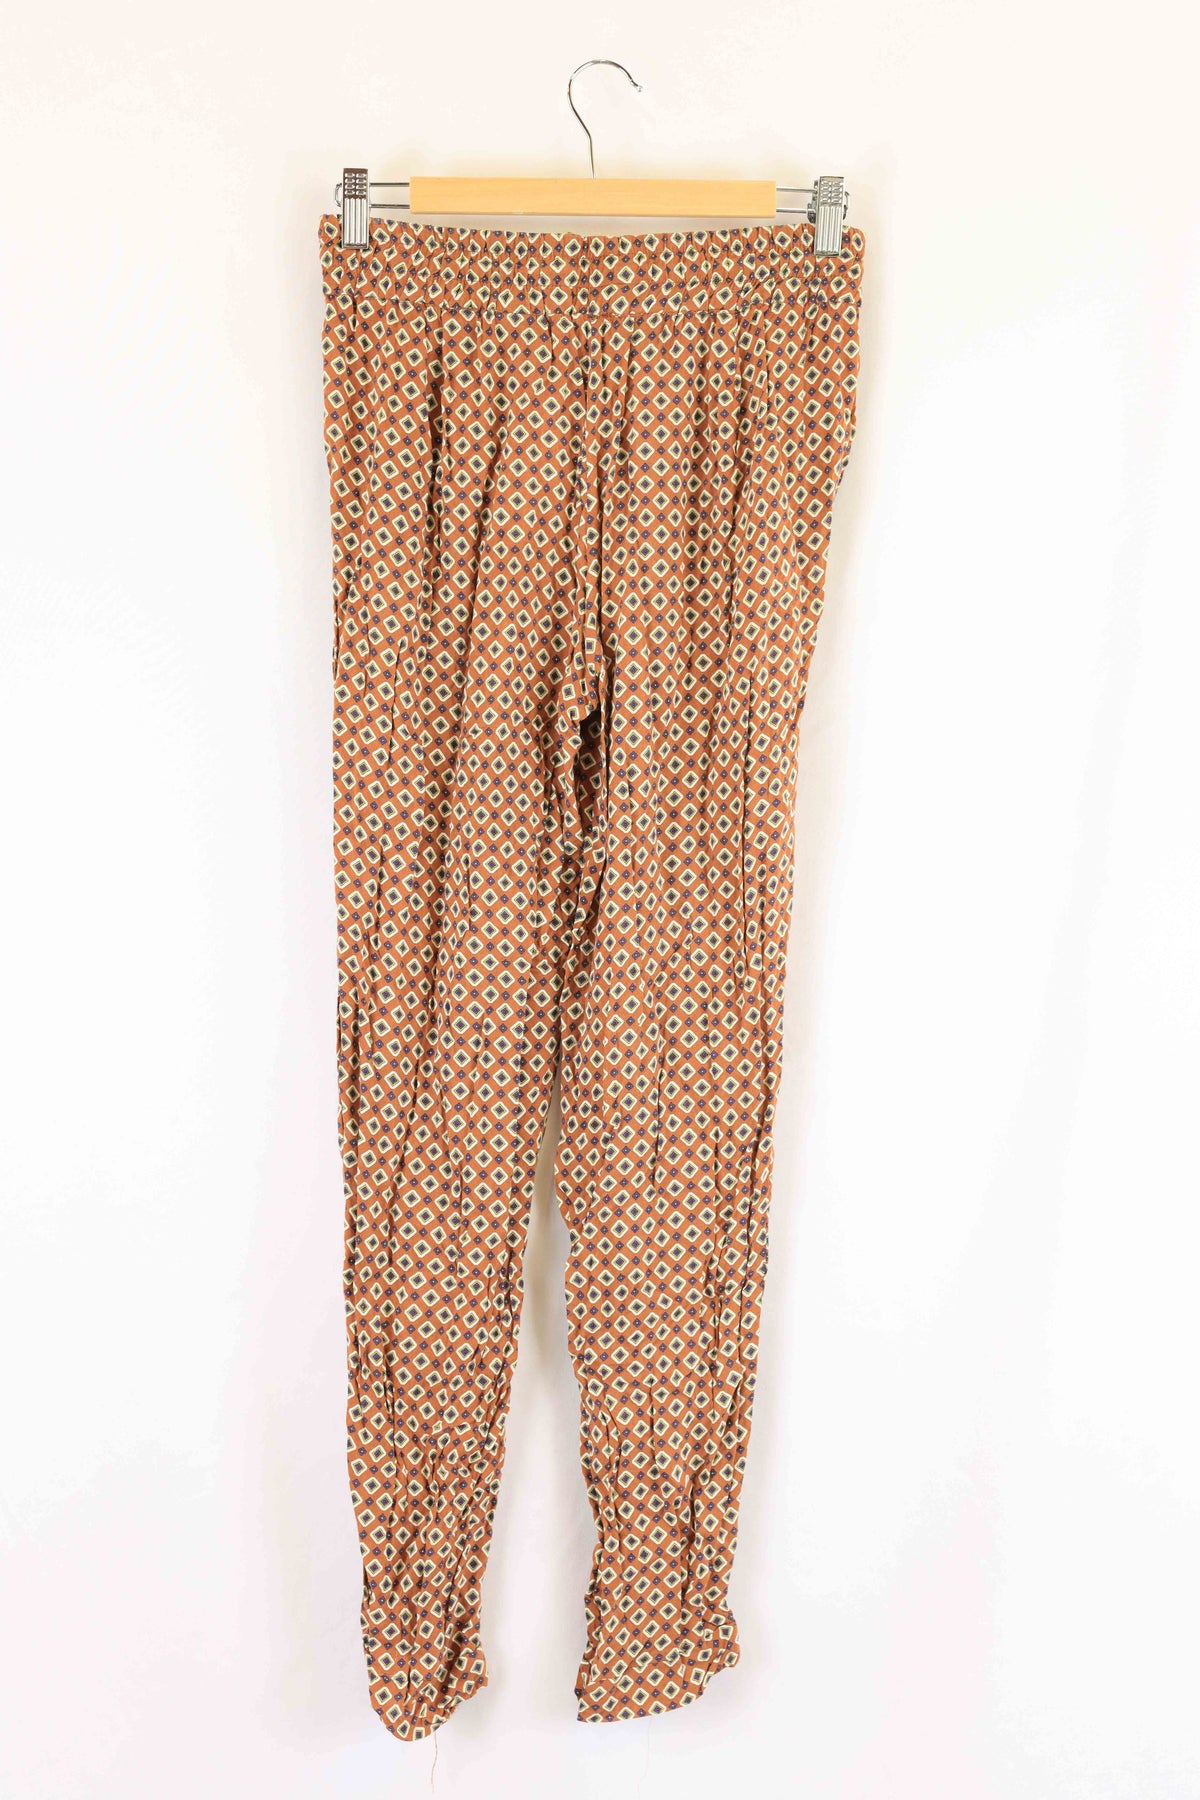 Zara Brown Patterned Pants S